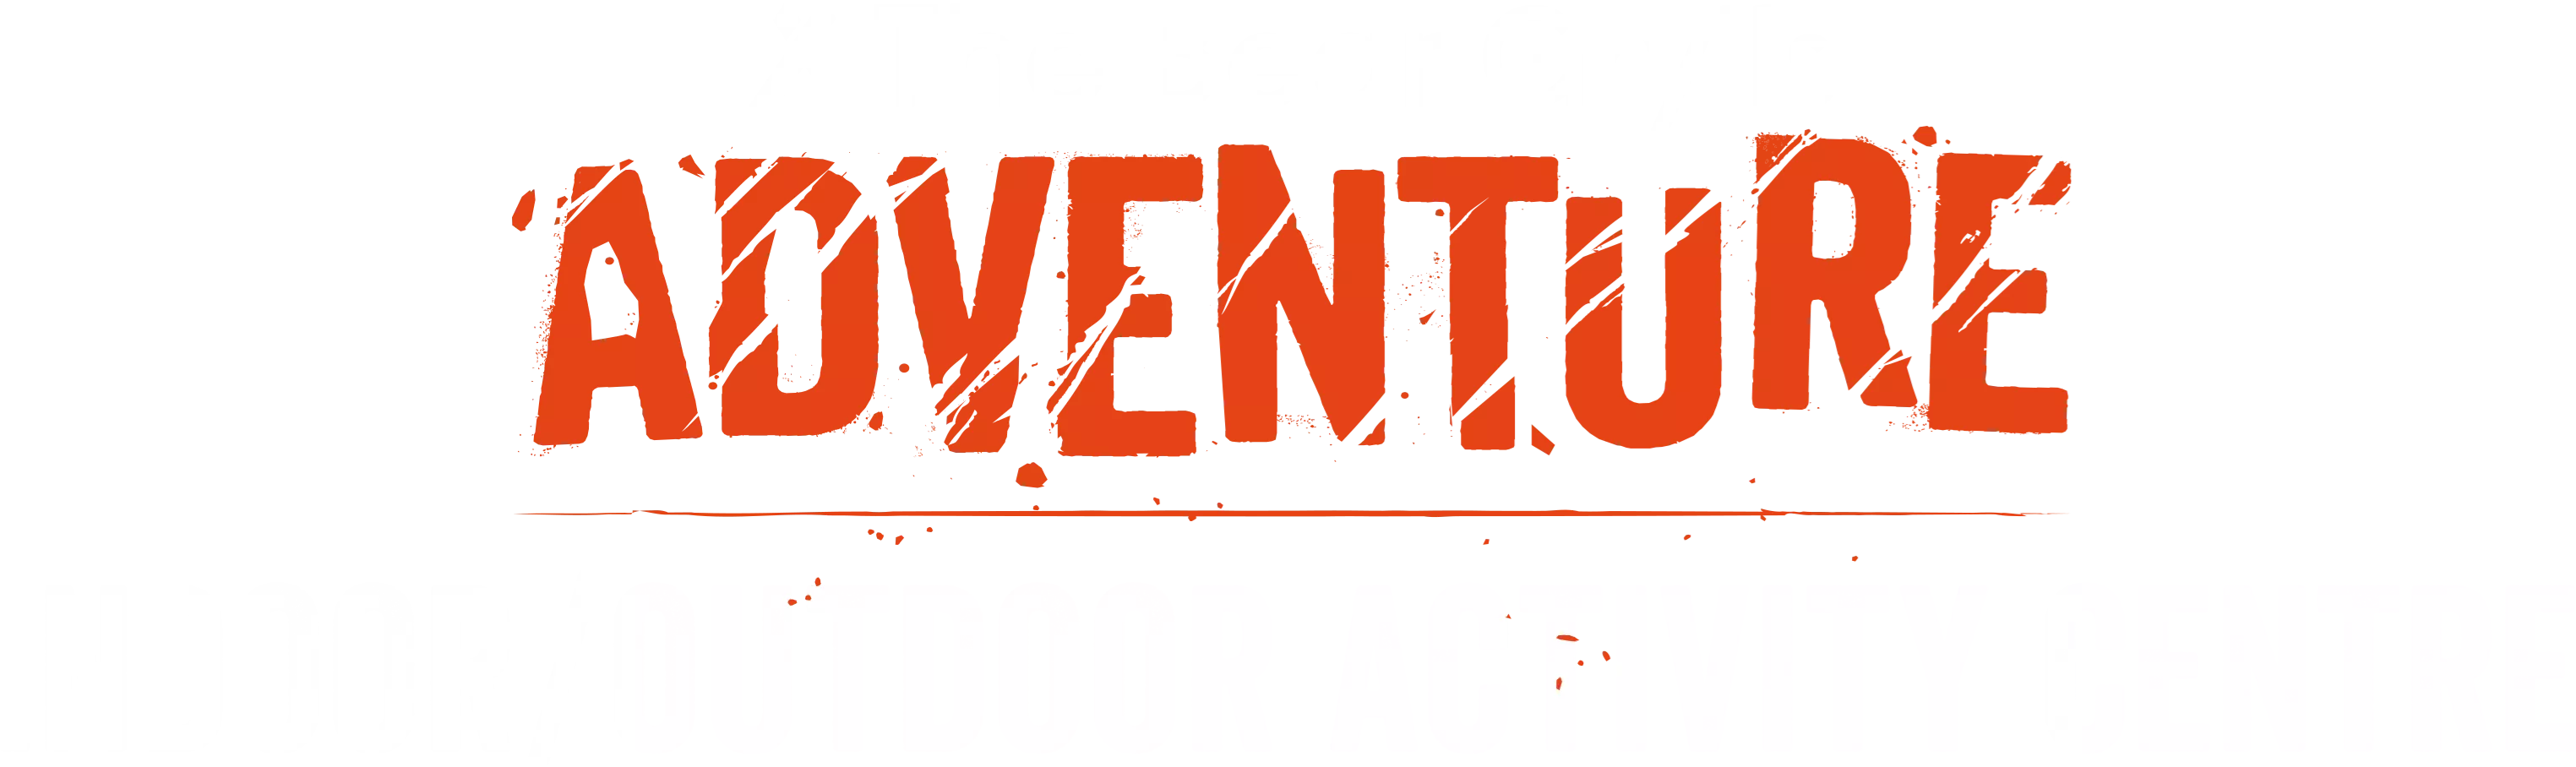 Bear Grylls Logo Strapline